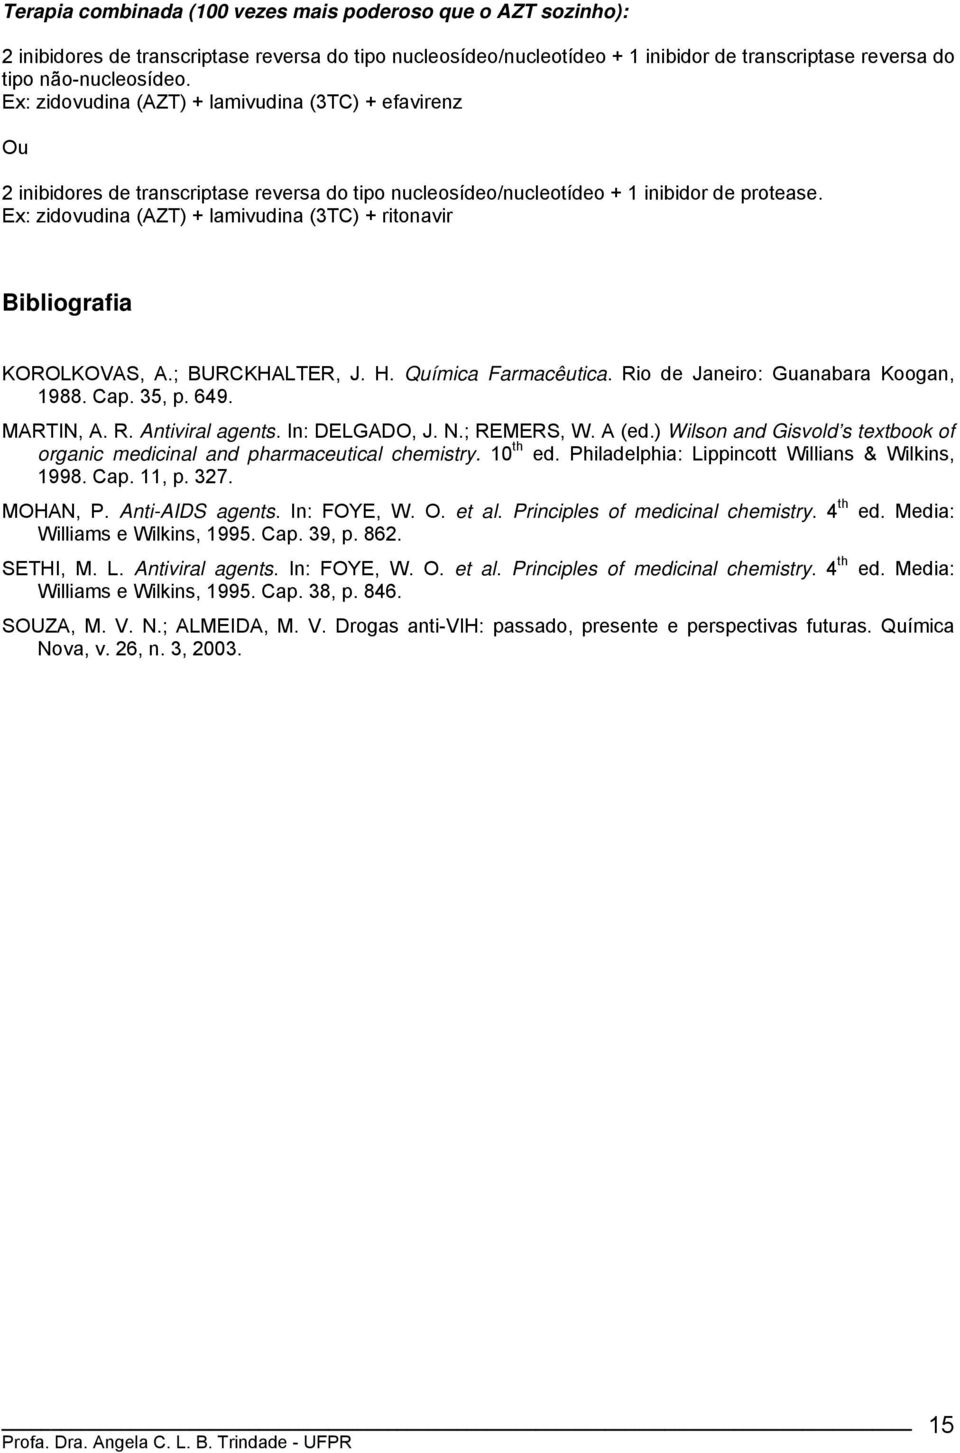 Ex: zidovudina (AZT) + lamivudina (3TC) + ritonavir Bibliografia KRLKVAS, A.; BURCKALTER, J.. Química Farmacêutica. Rio de Janeiro: Guanabara Koogan, 1988. Cap. 35, p. 649. MARTI, A. R. Antiviral agents.